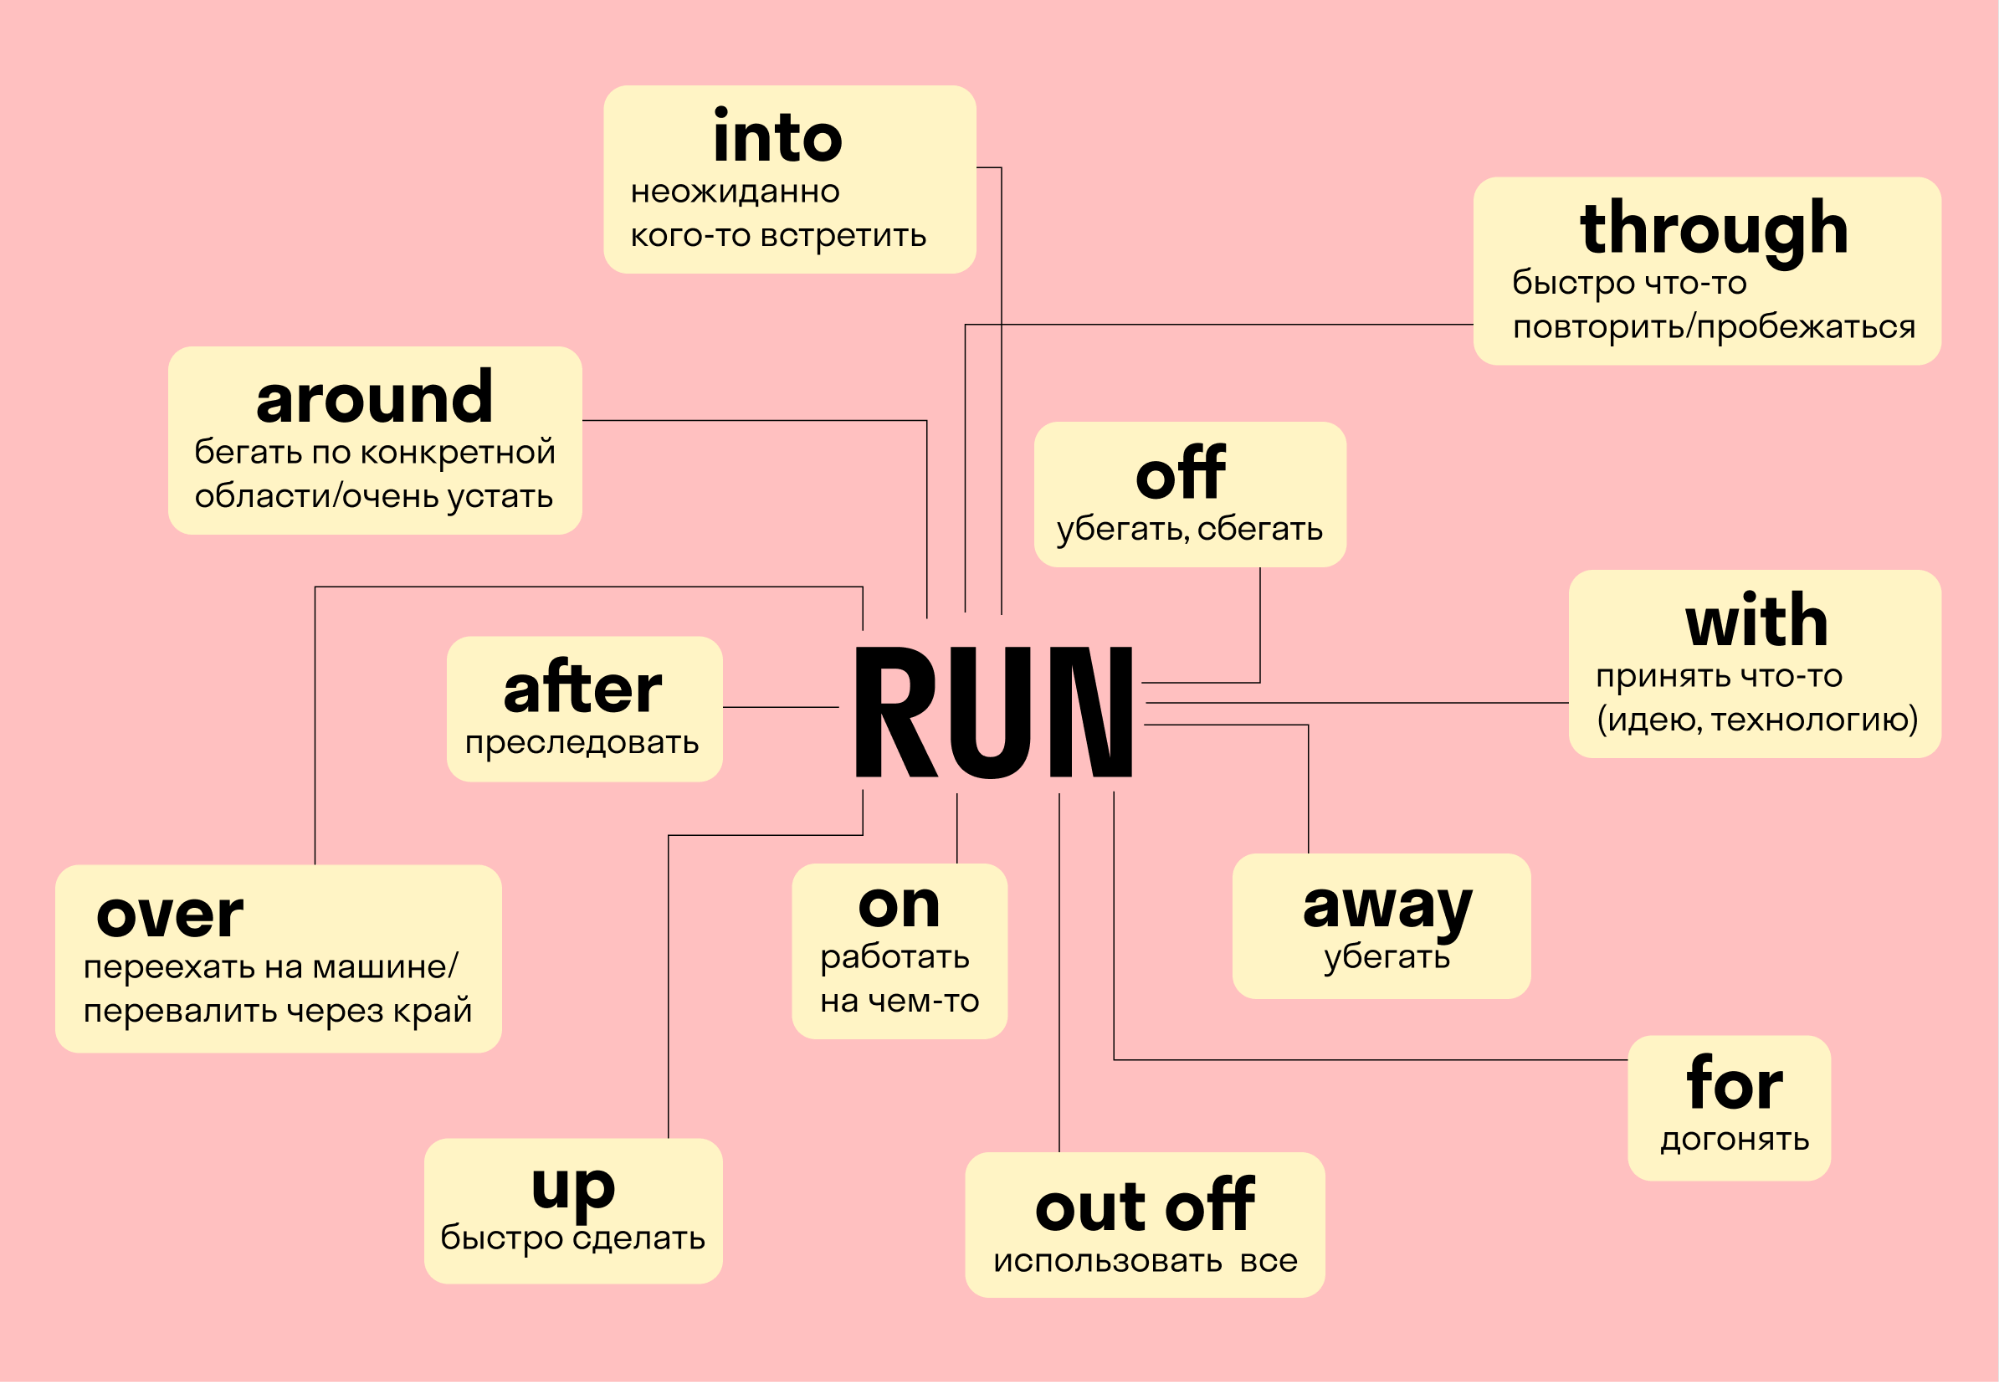 Around up 4. Фразовые глаголы в английском Run. Run into Фразовый глагол. Фразовый глагол Run в английском языке. Run out of Фразовый глагол.